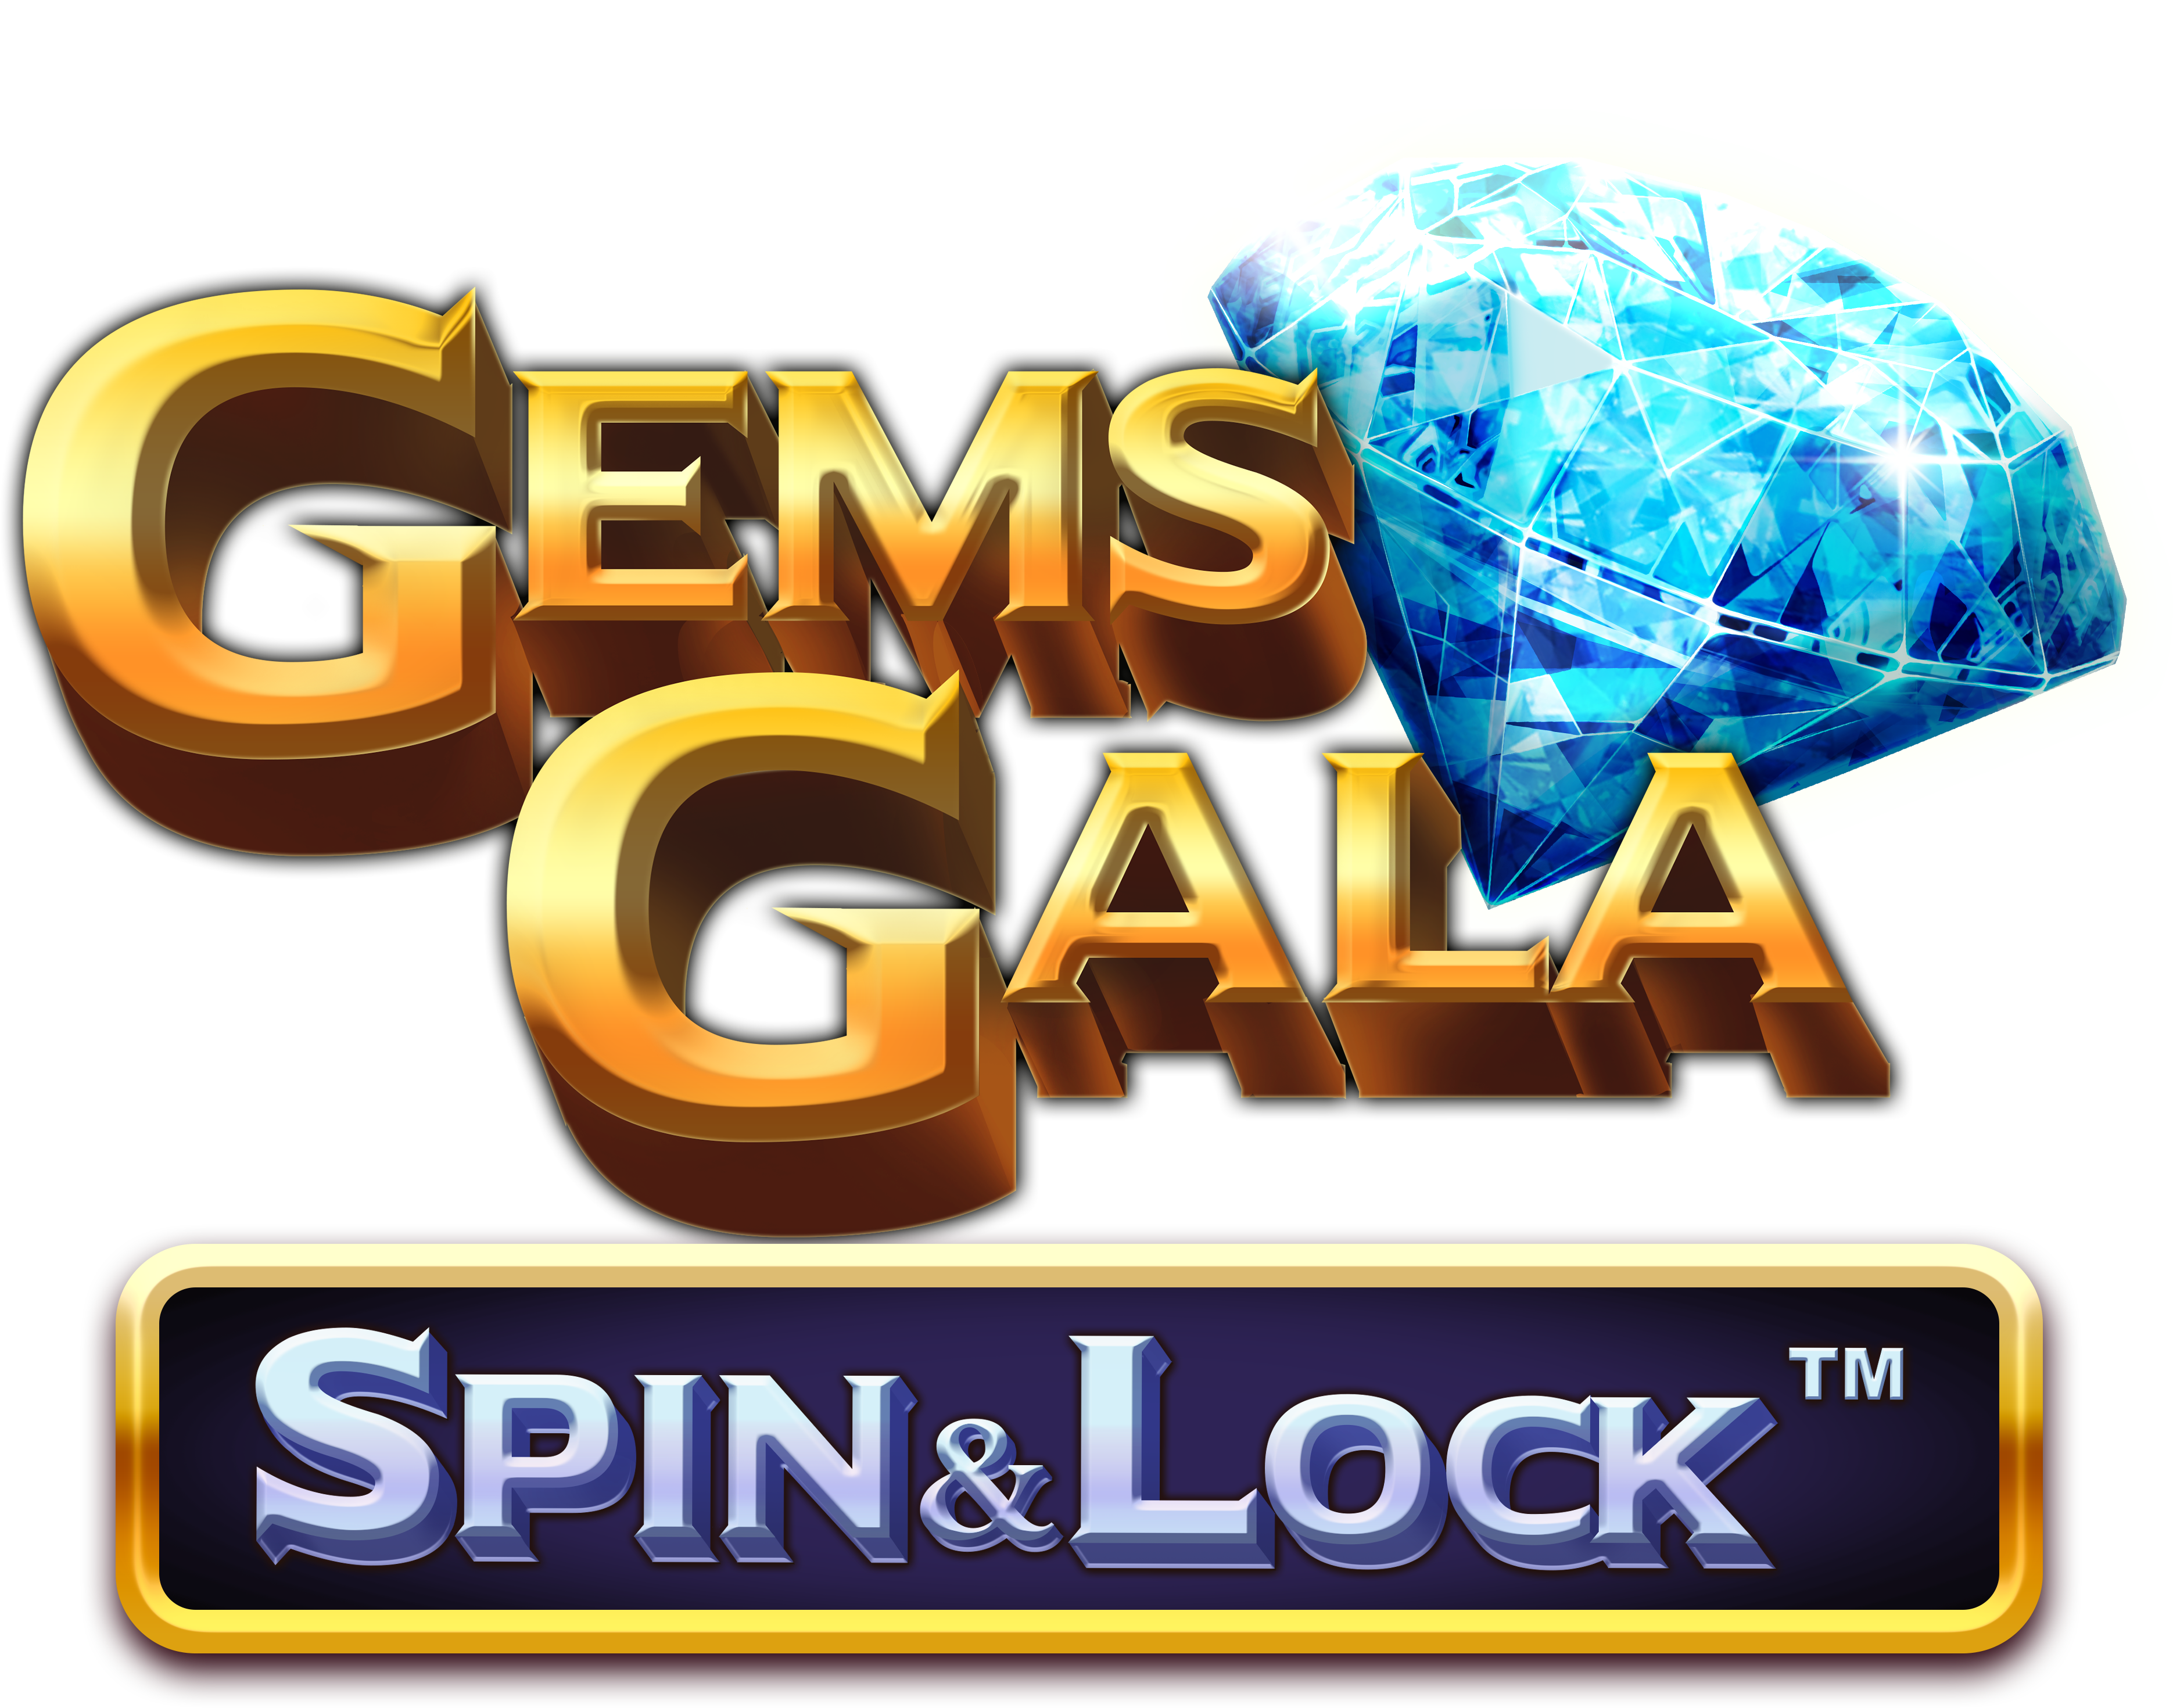 Gems Gala Spin & Lock™